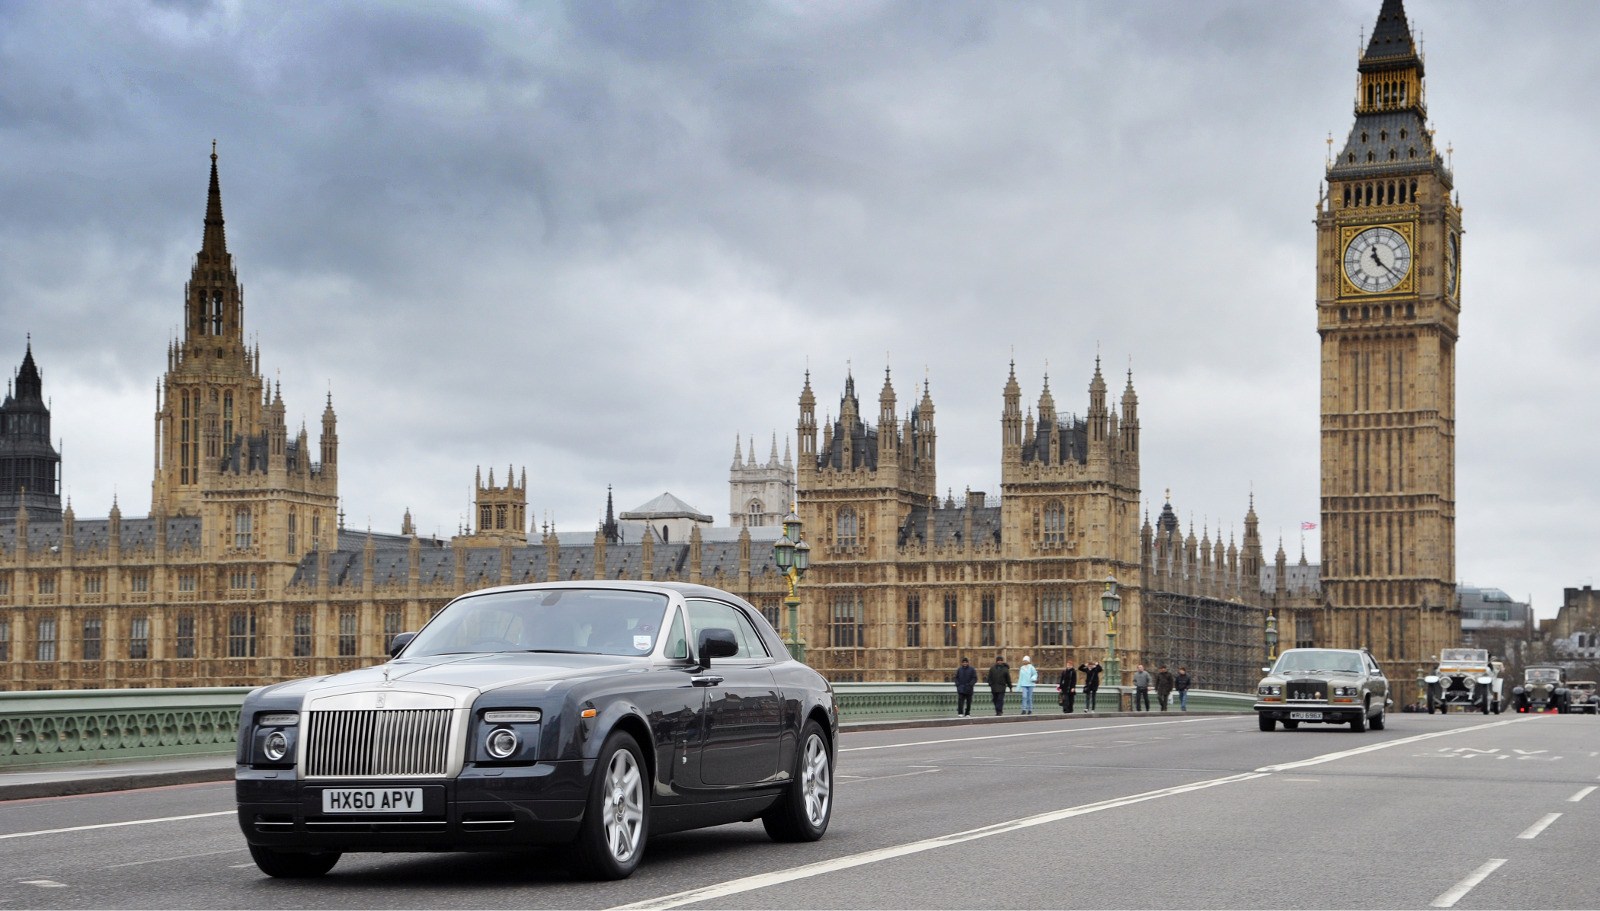 http://www.bimmertoday.de/wp-content/uploads/Rolls-Royce-Spirit-of-Ecstasy-Centenary-Drive-London-2011-02.jpg